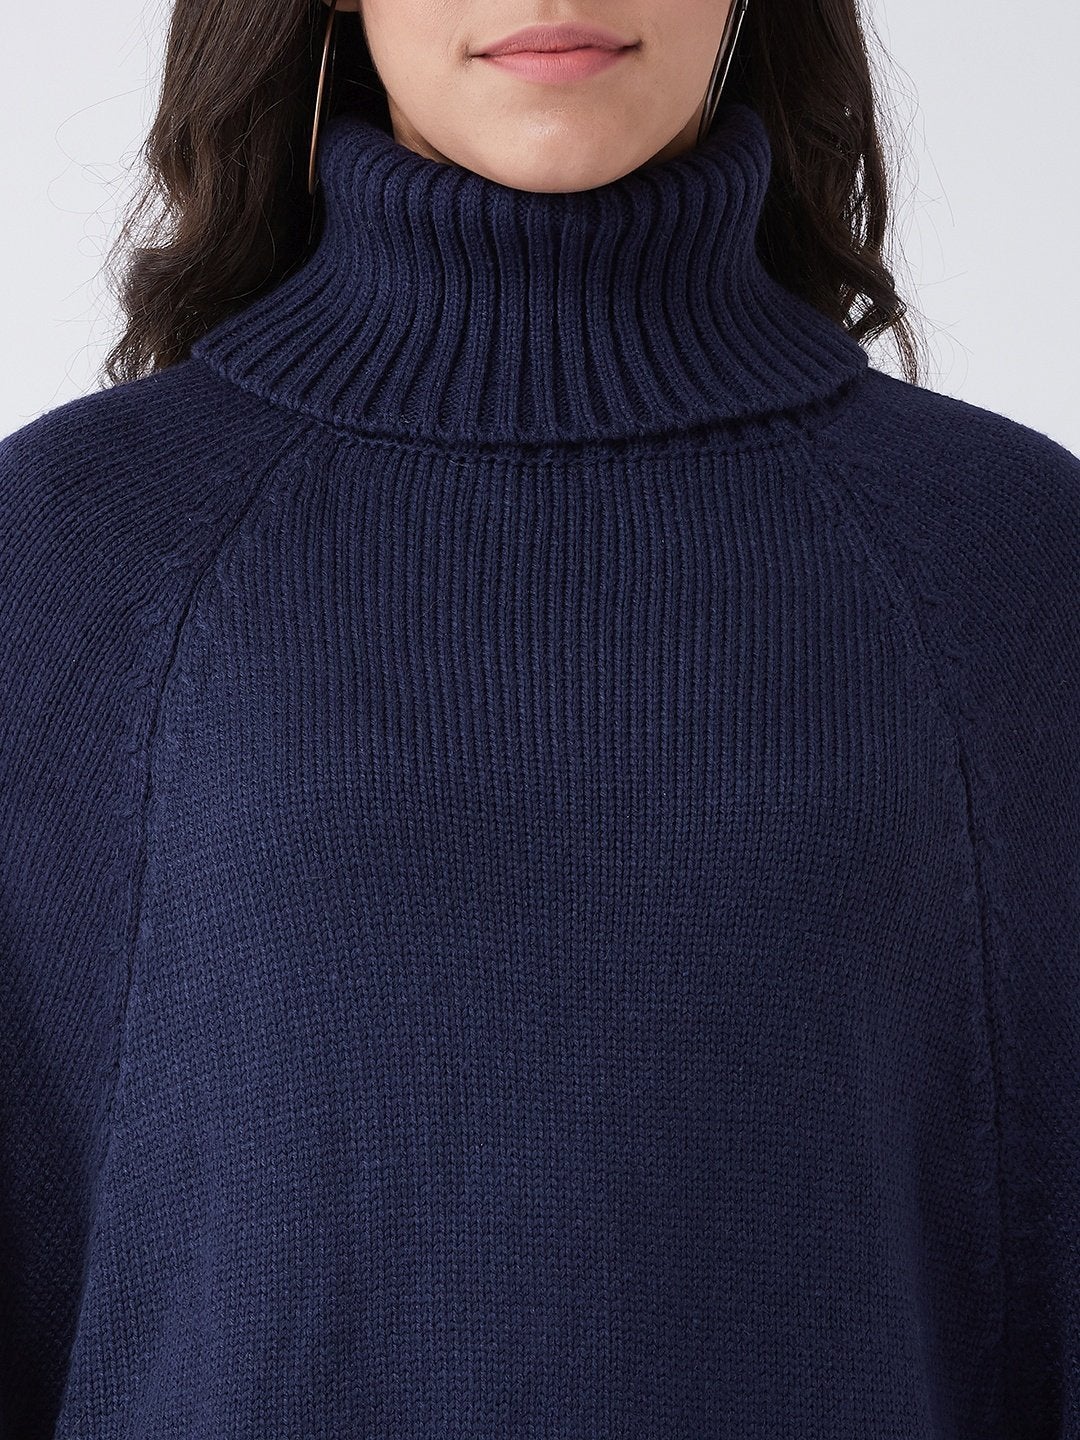 Women's Navy Blue Sweater Poncho - InWeave